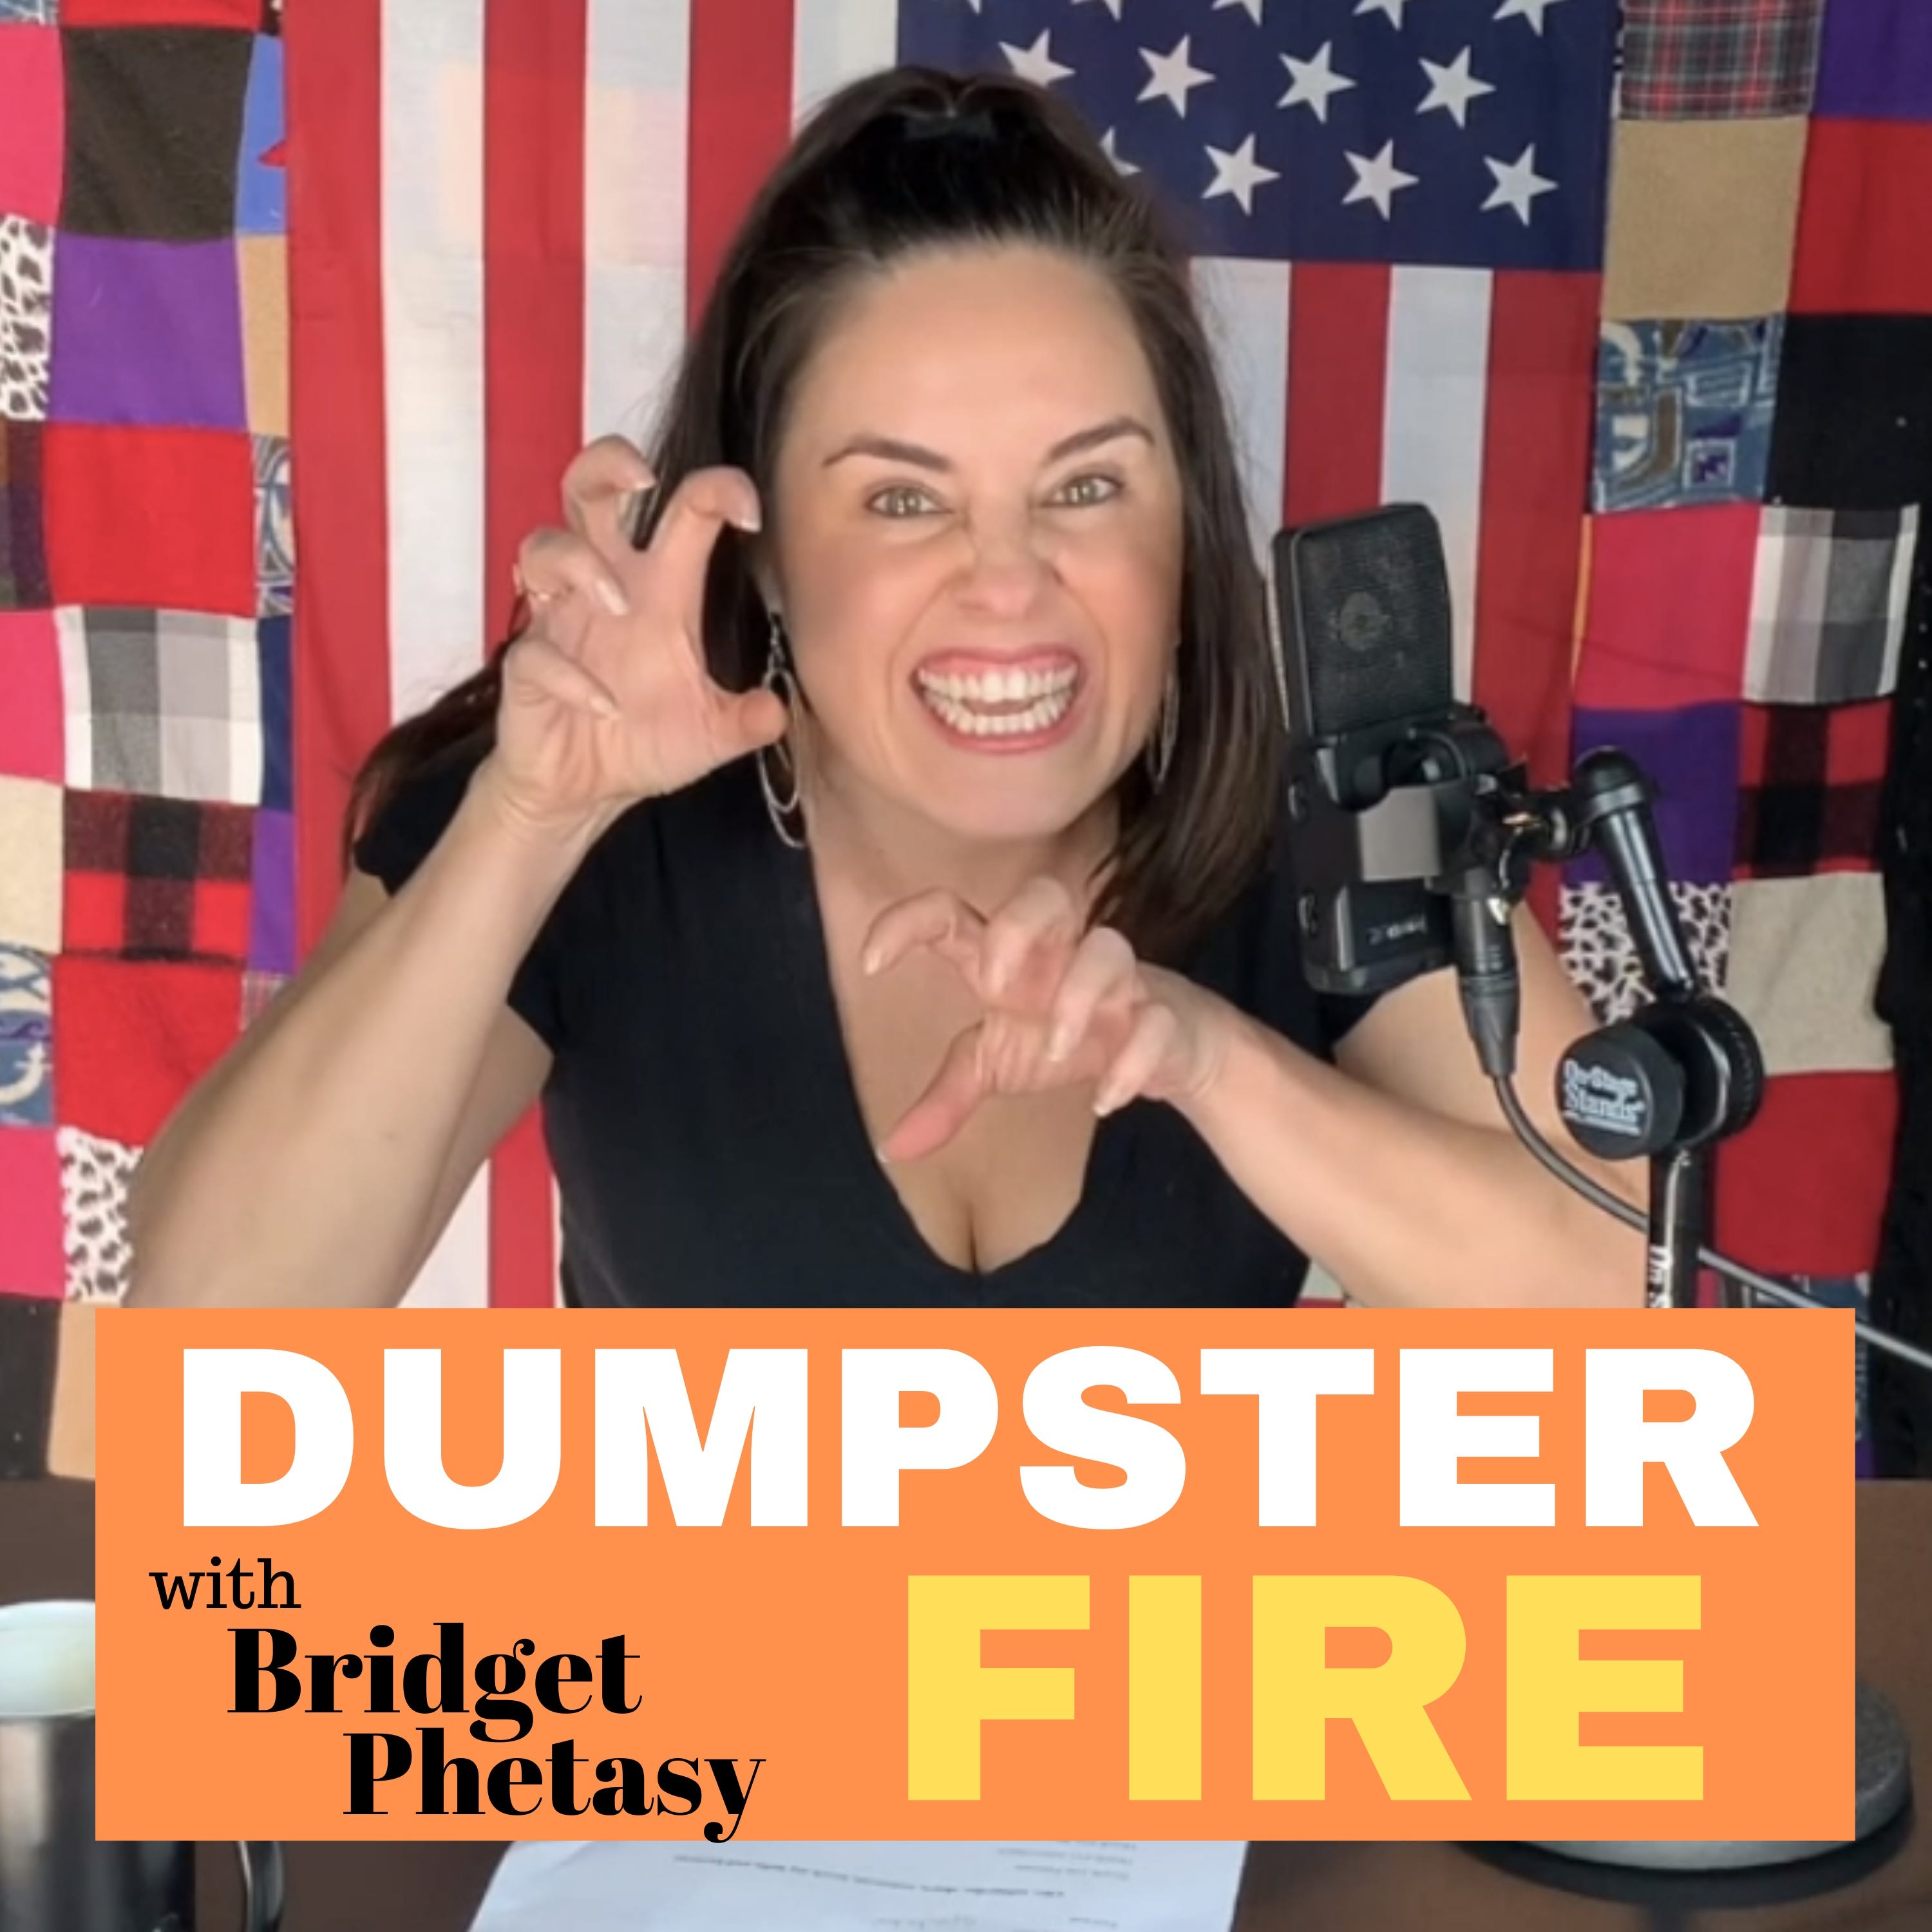 Dumpster Fire 10 - Epstein Didn't Kill Himself